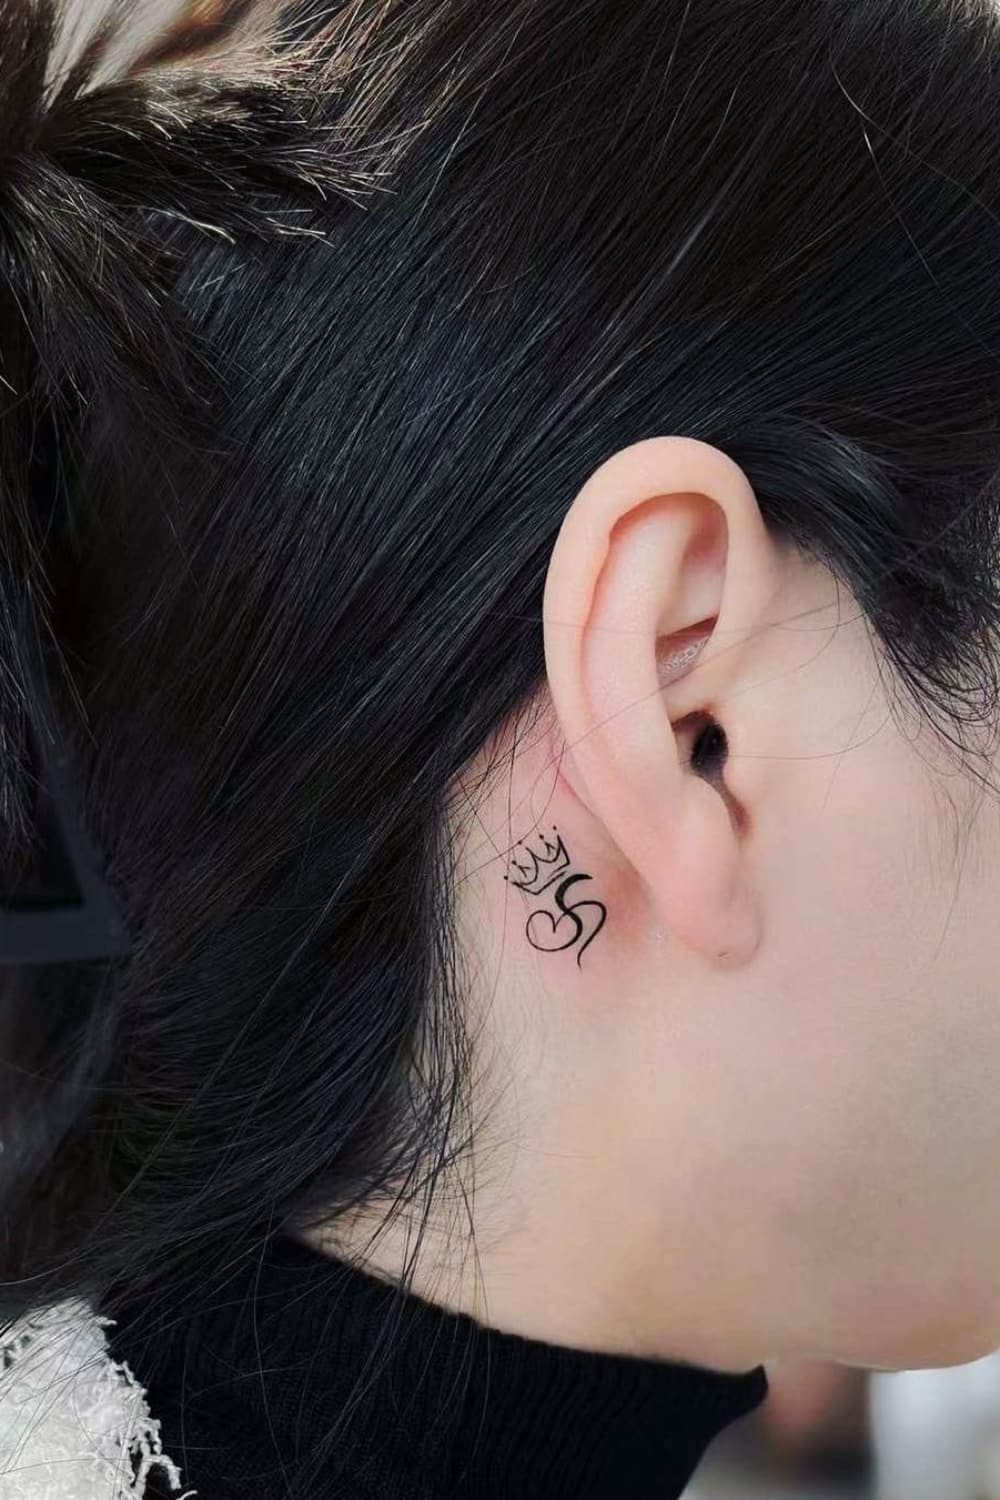 Crown Tattoo Behind Ear